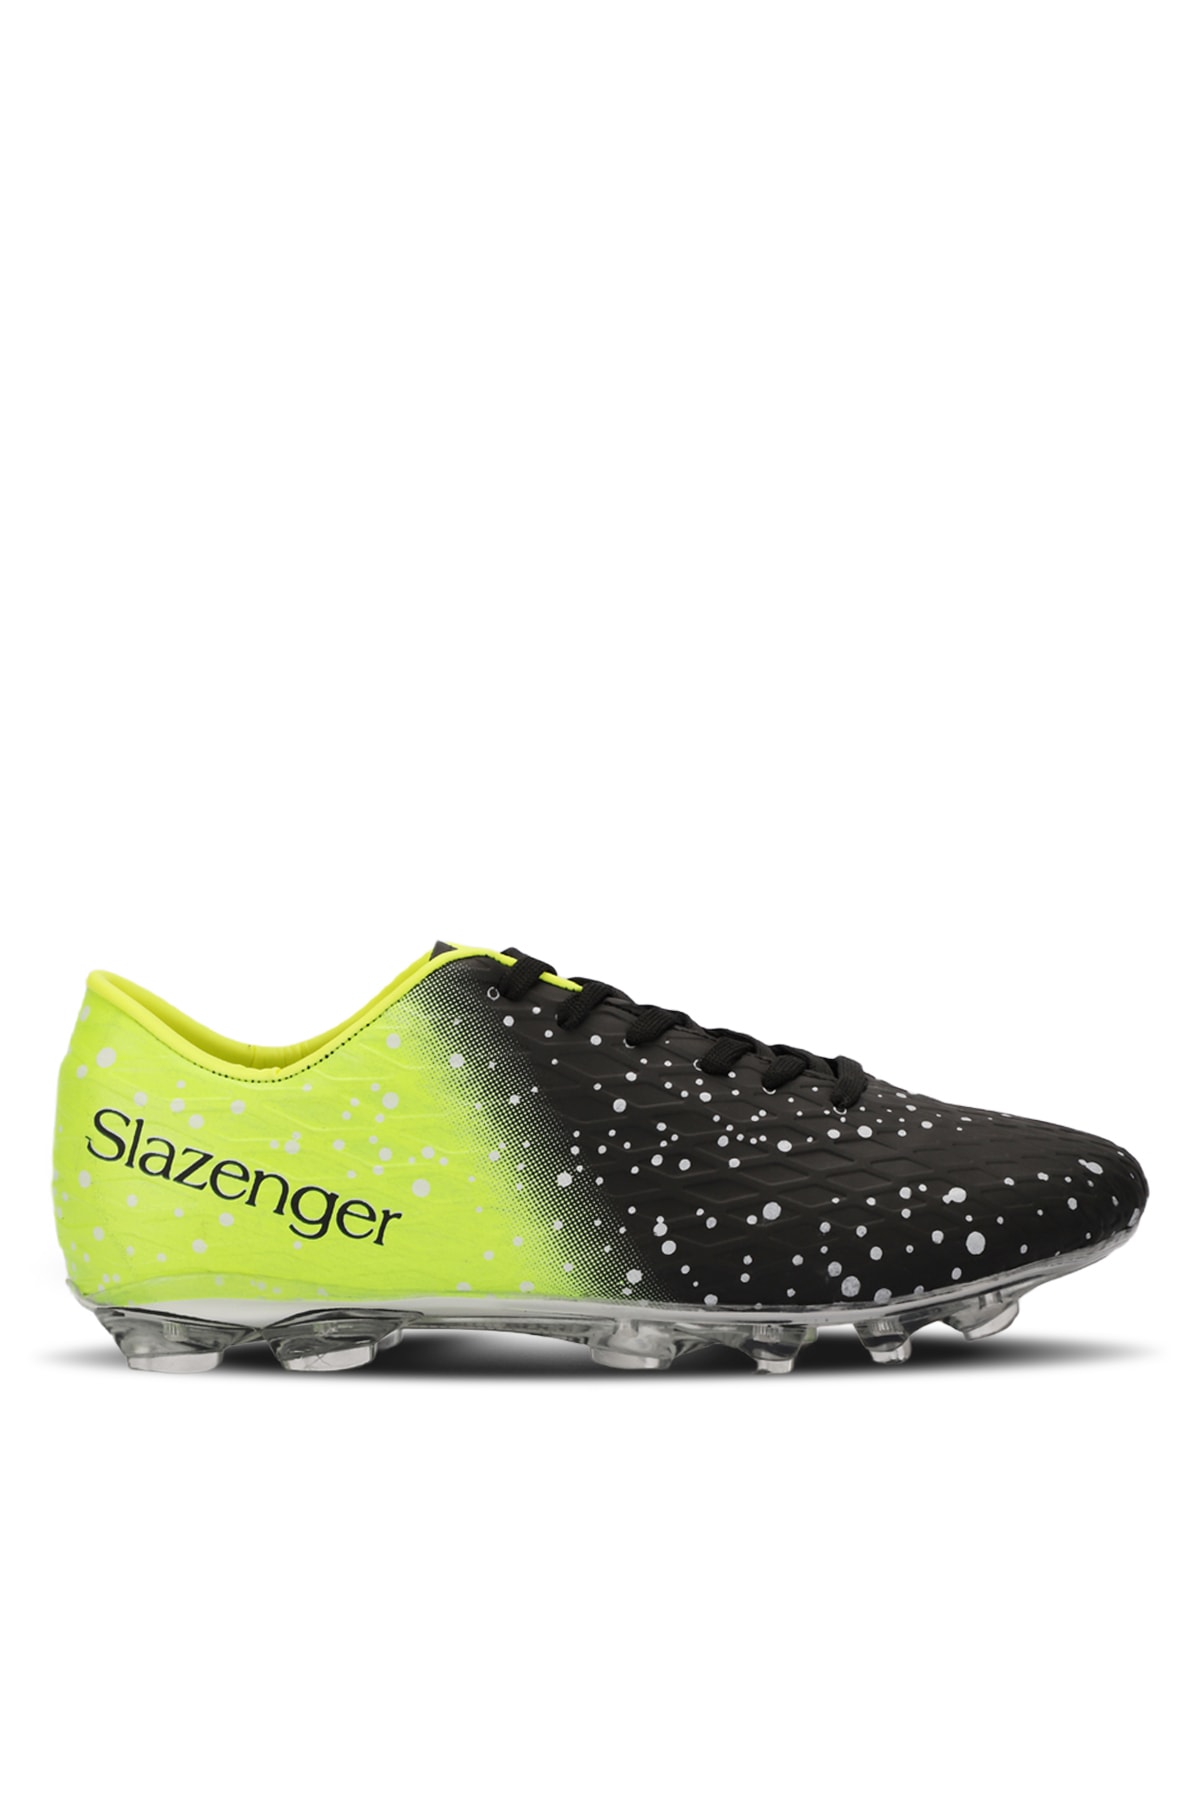 Slazenger Hania Krp Football Men's Astroturf Field Shoes Black